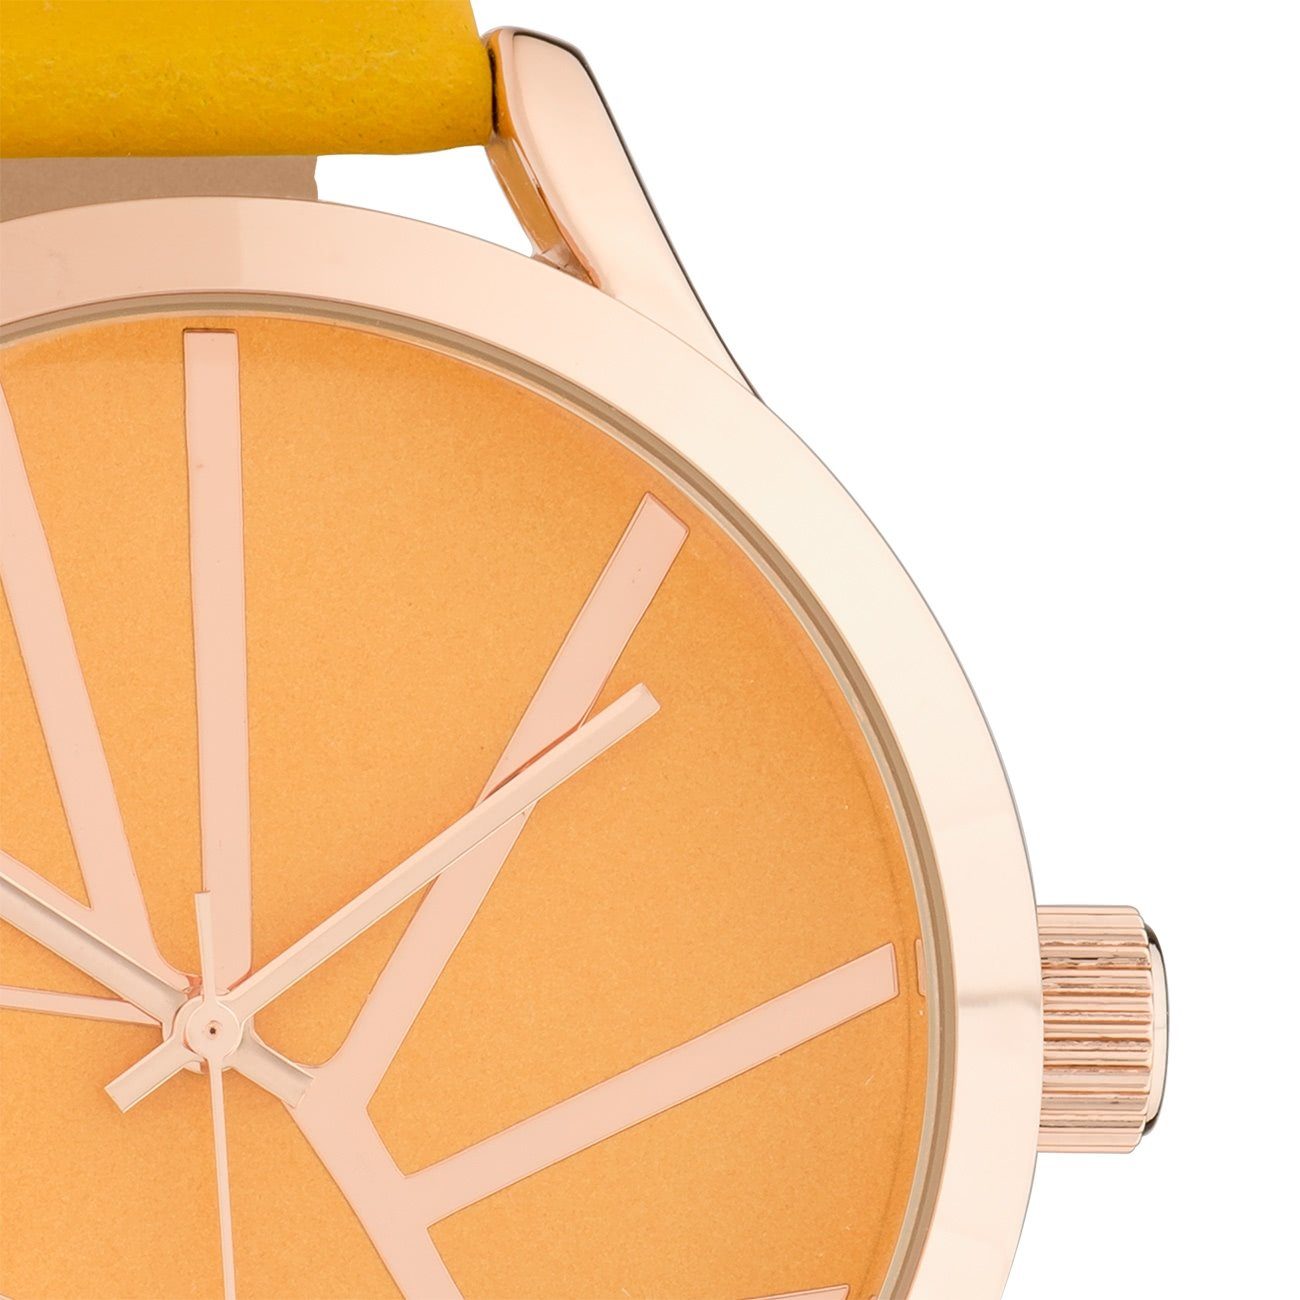 (ca. Quarzuhr rund, Armbanduhr Damen Fashion Lederarmband OOZOO Oozoo Timepieces, Damenuhr 43mm), groß gelb, OOZOO